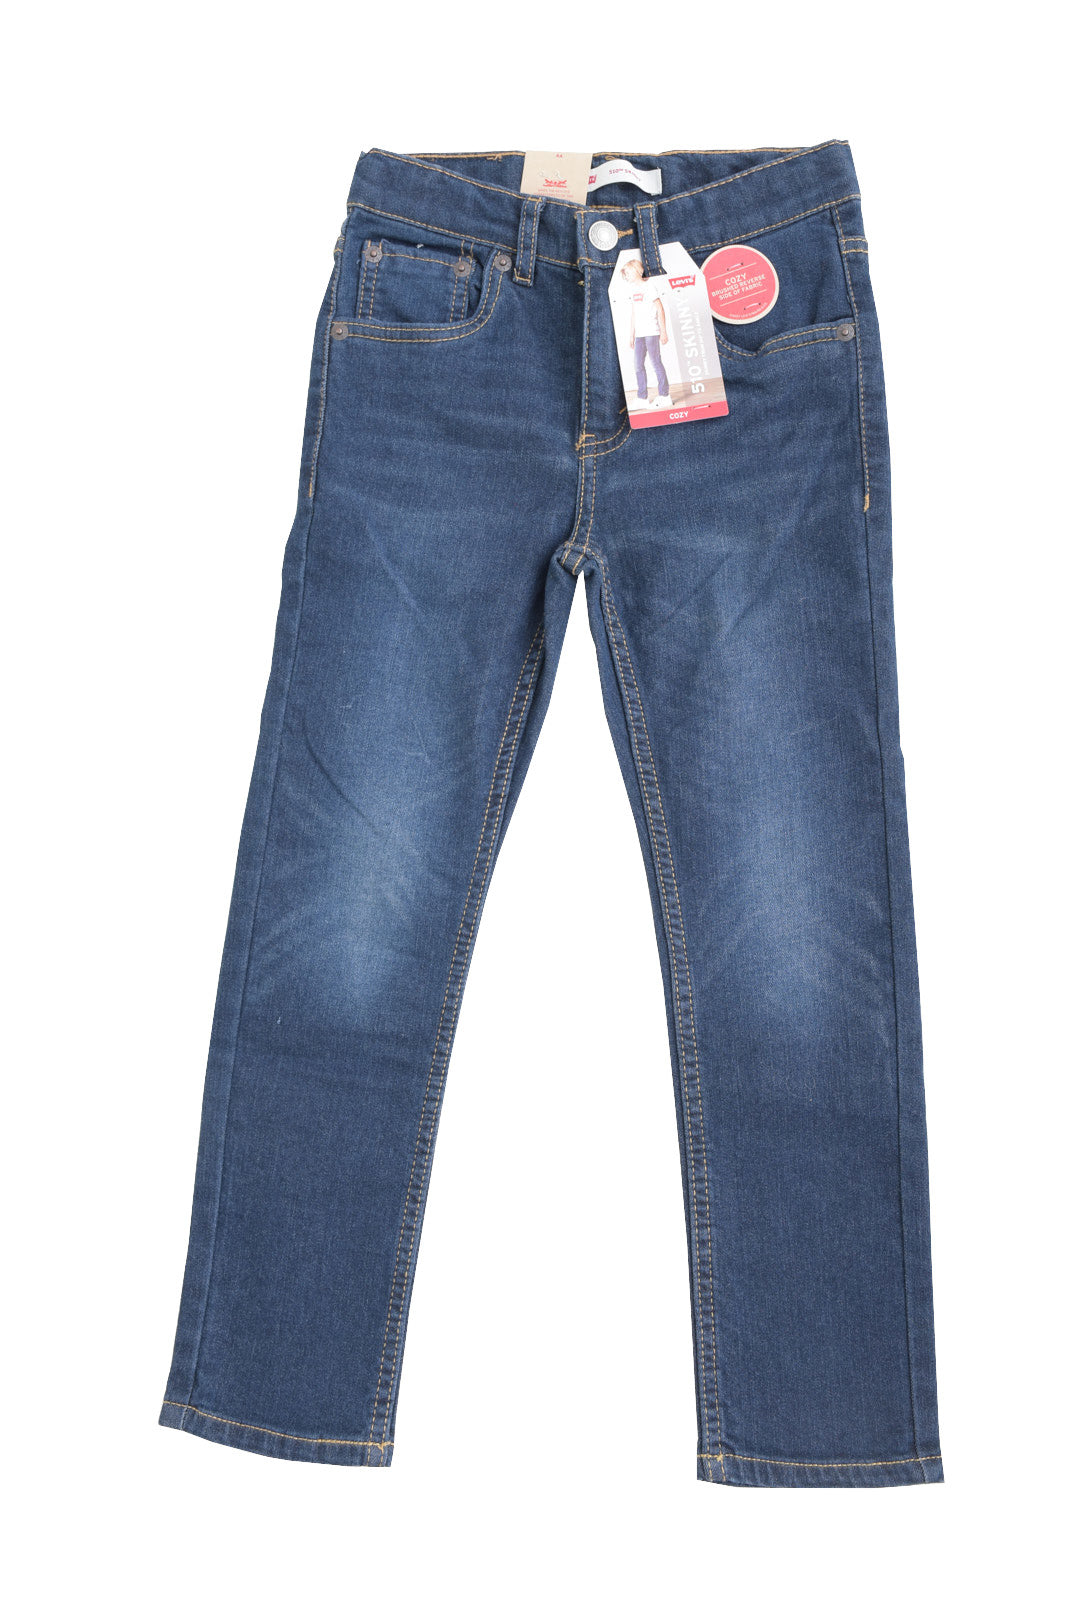 Levi's Jeans Bambino 510 skinny